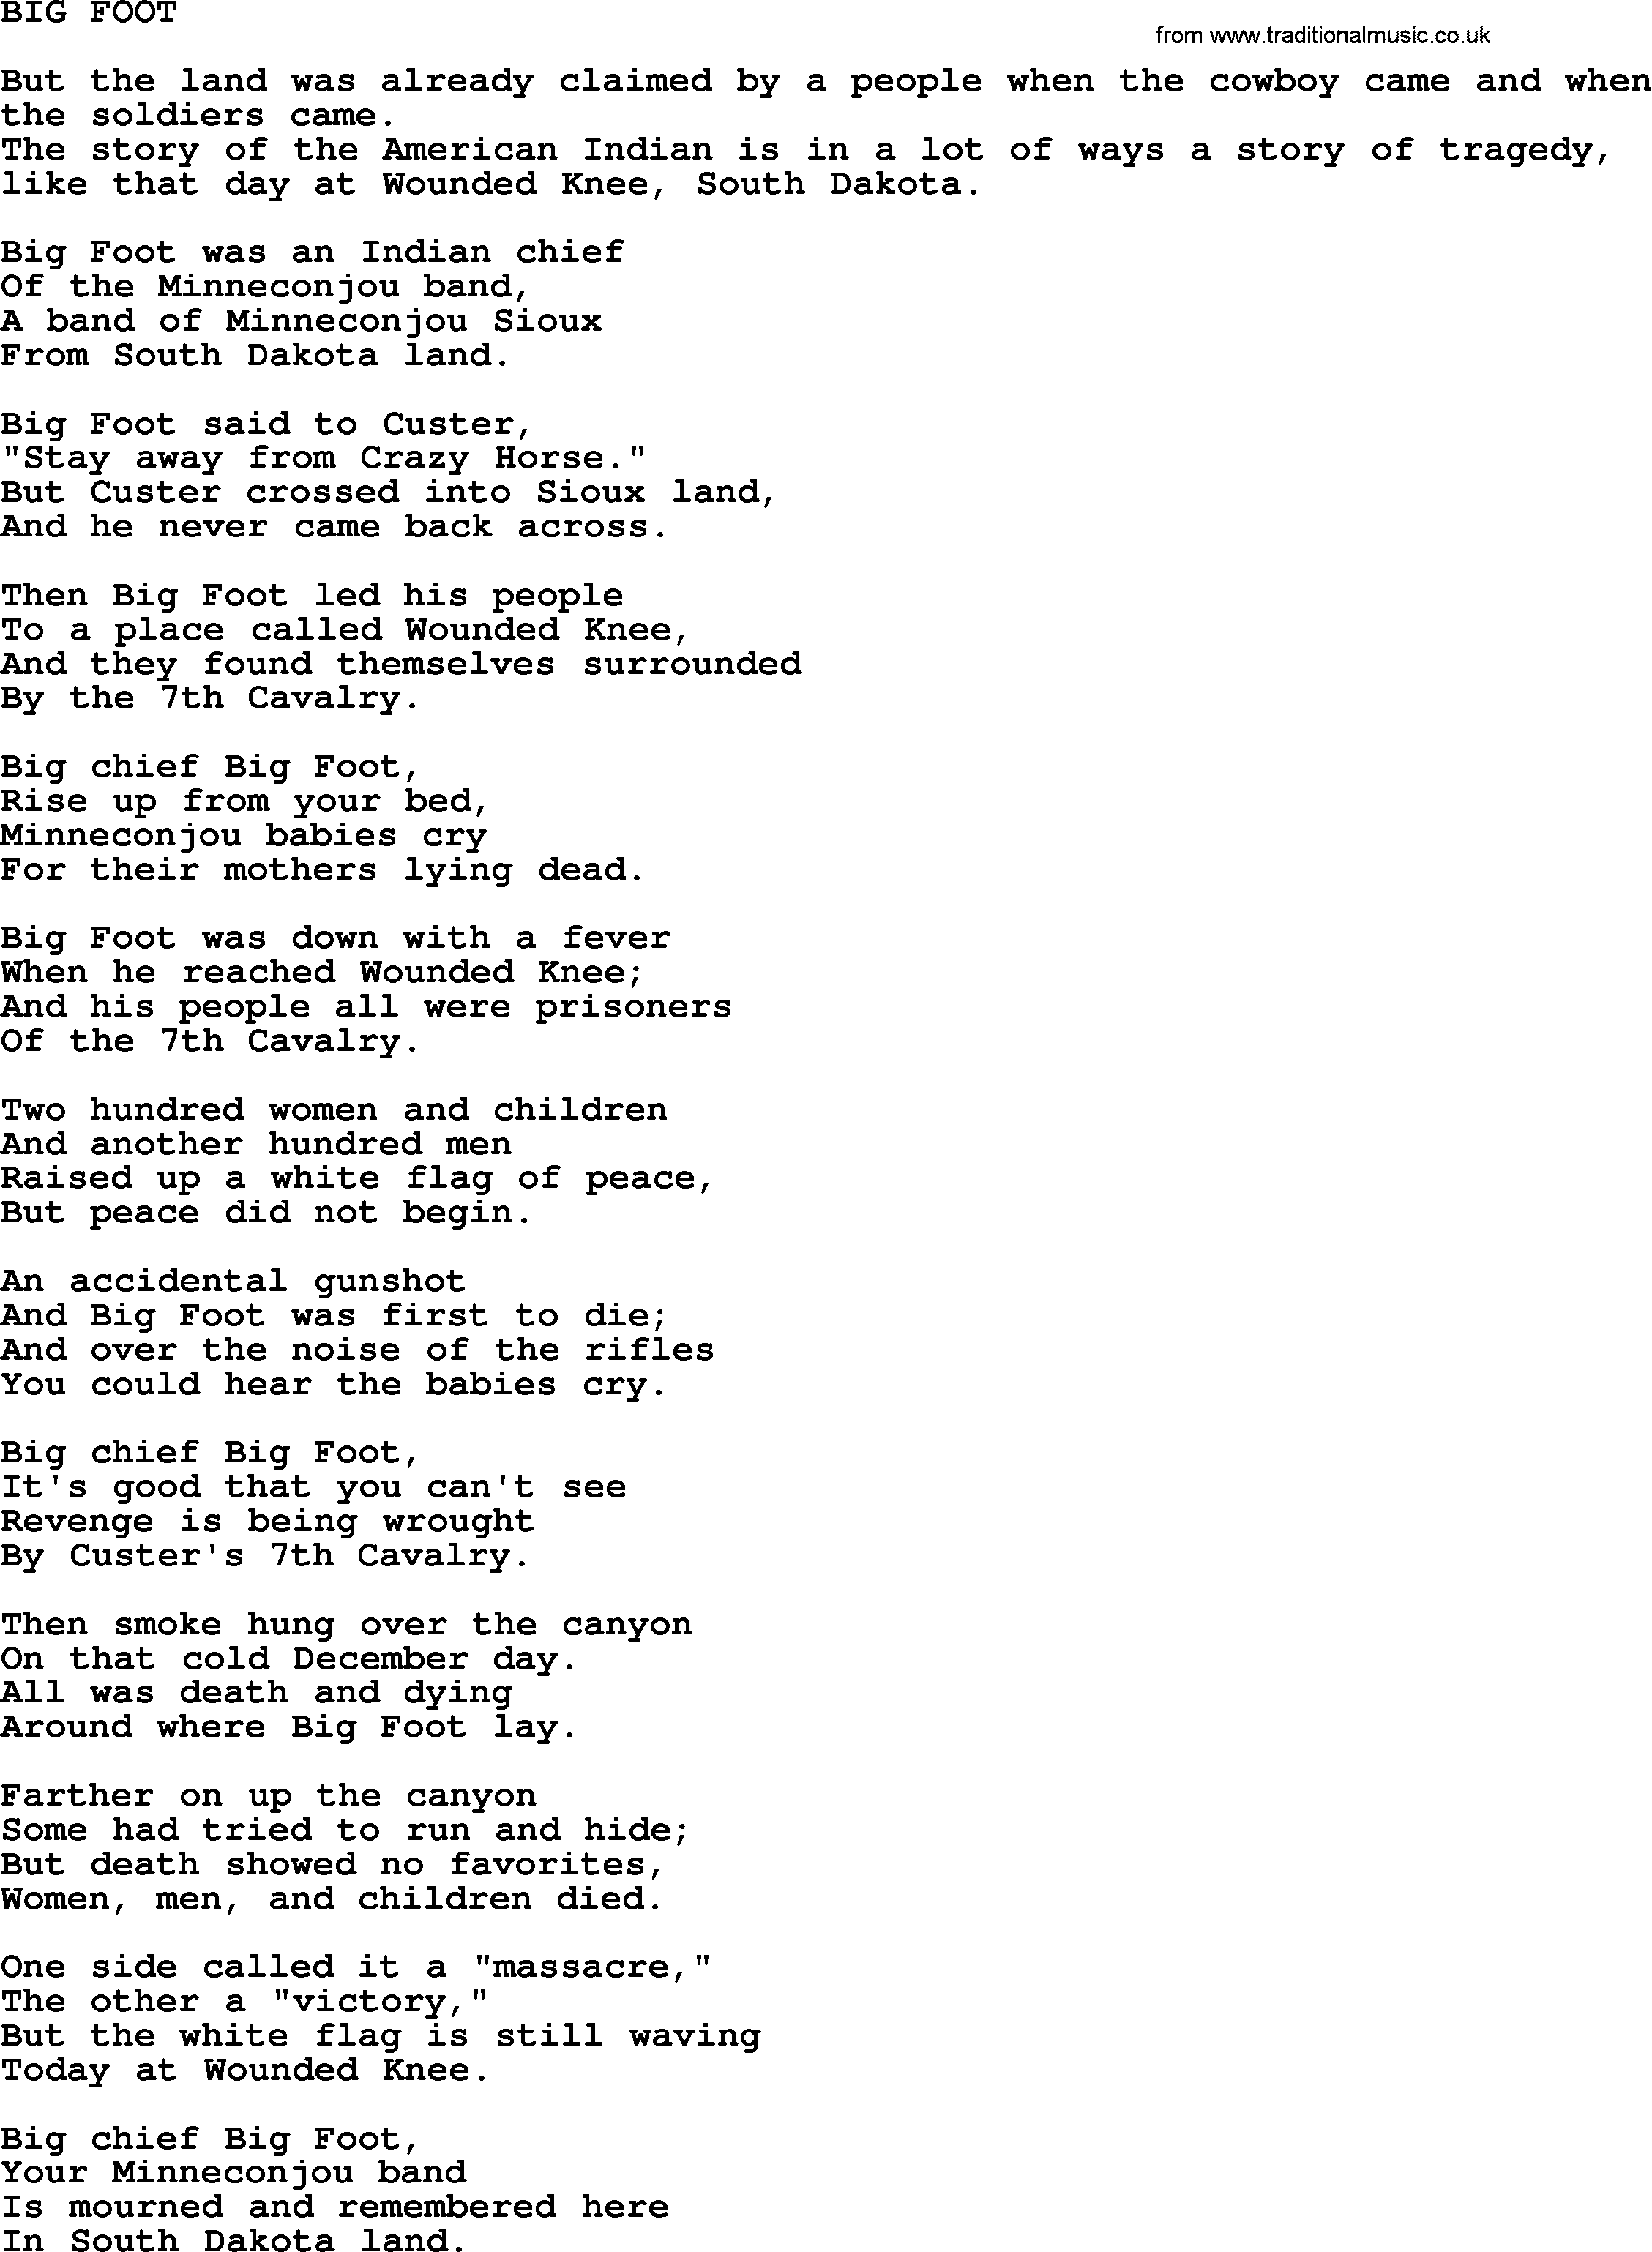 Johnny Cash song Big Foot.txt lyrics